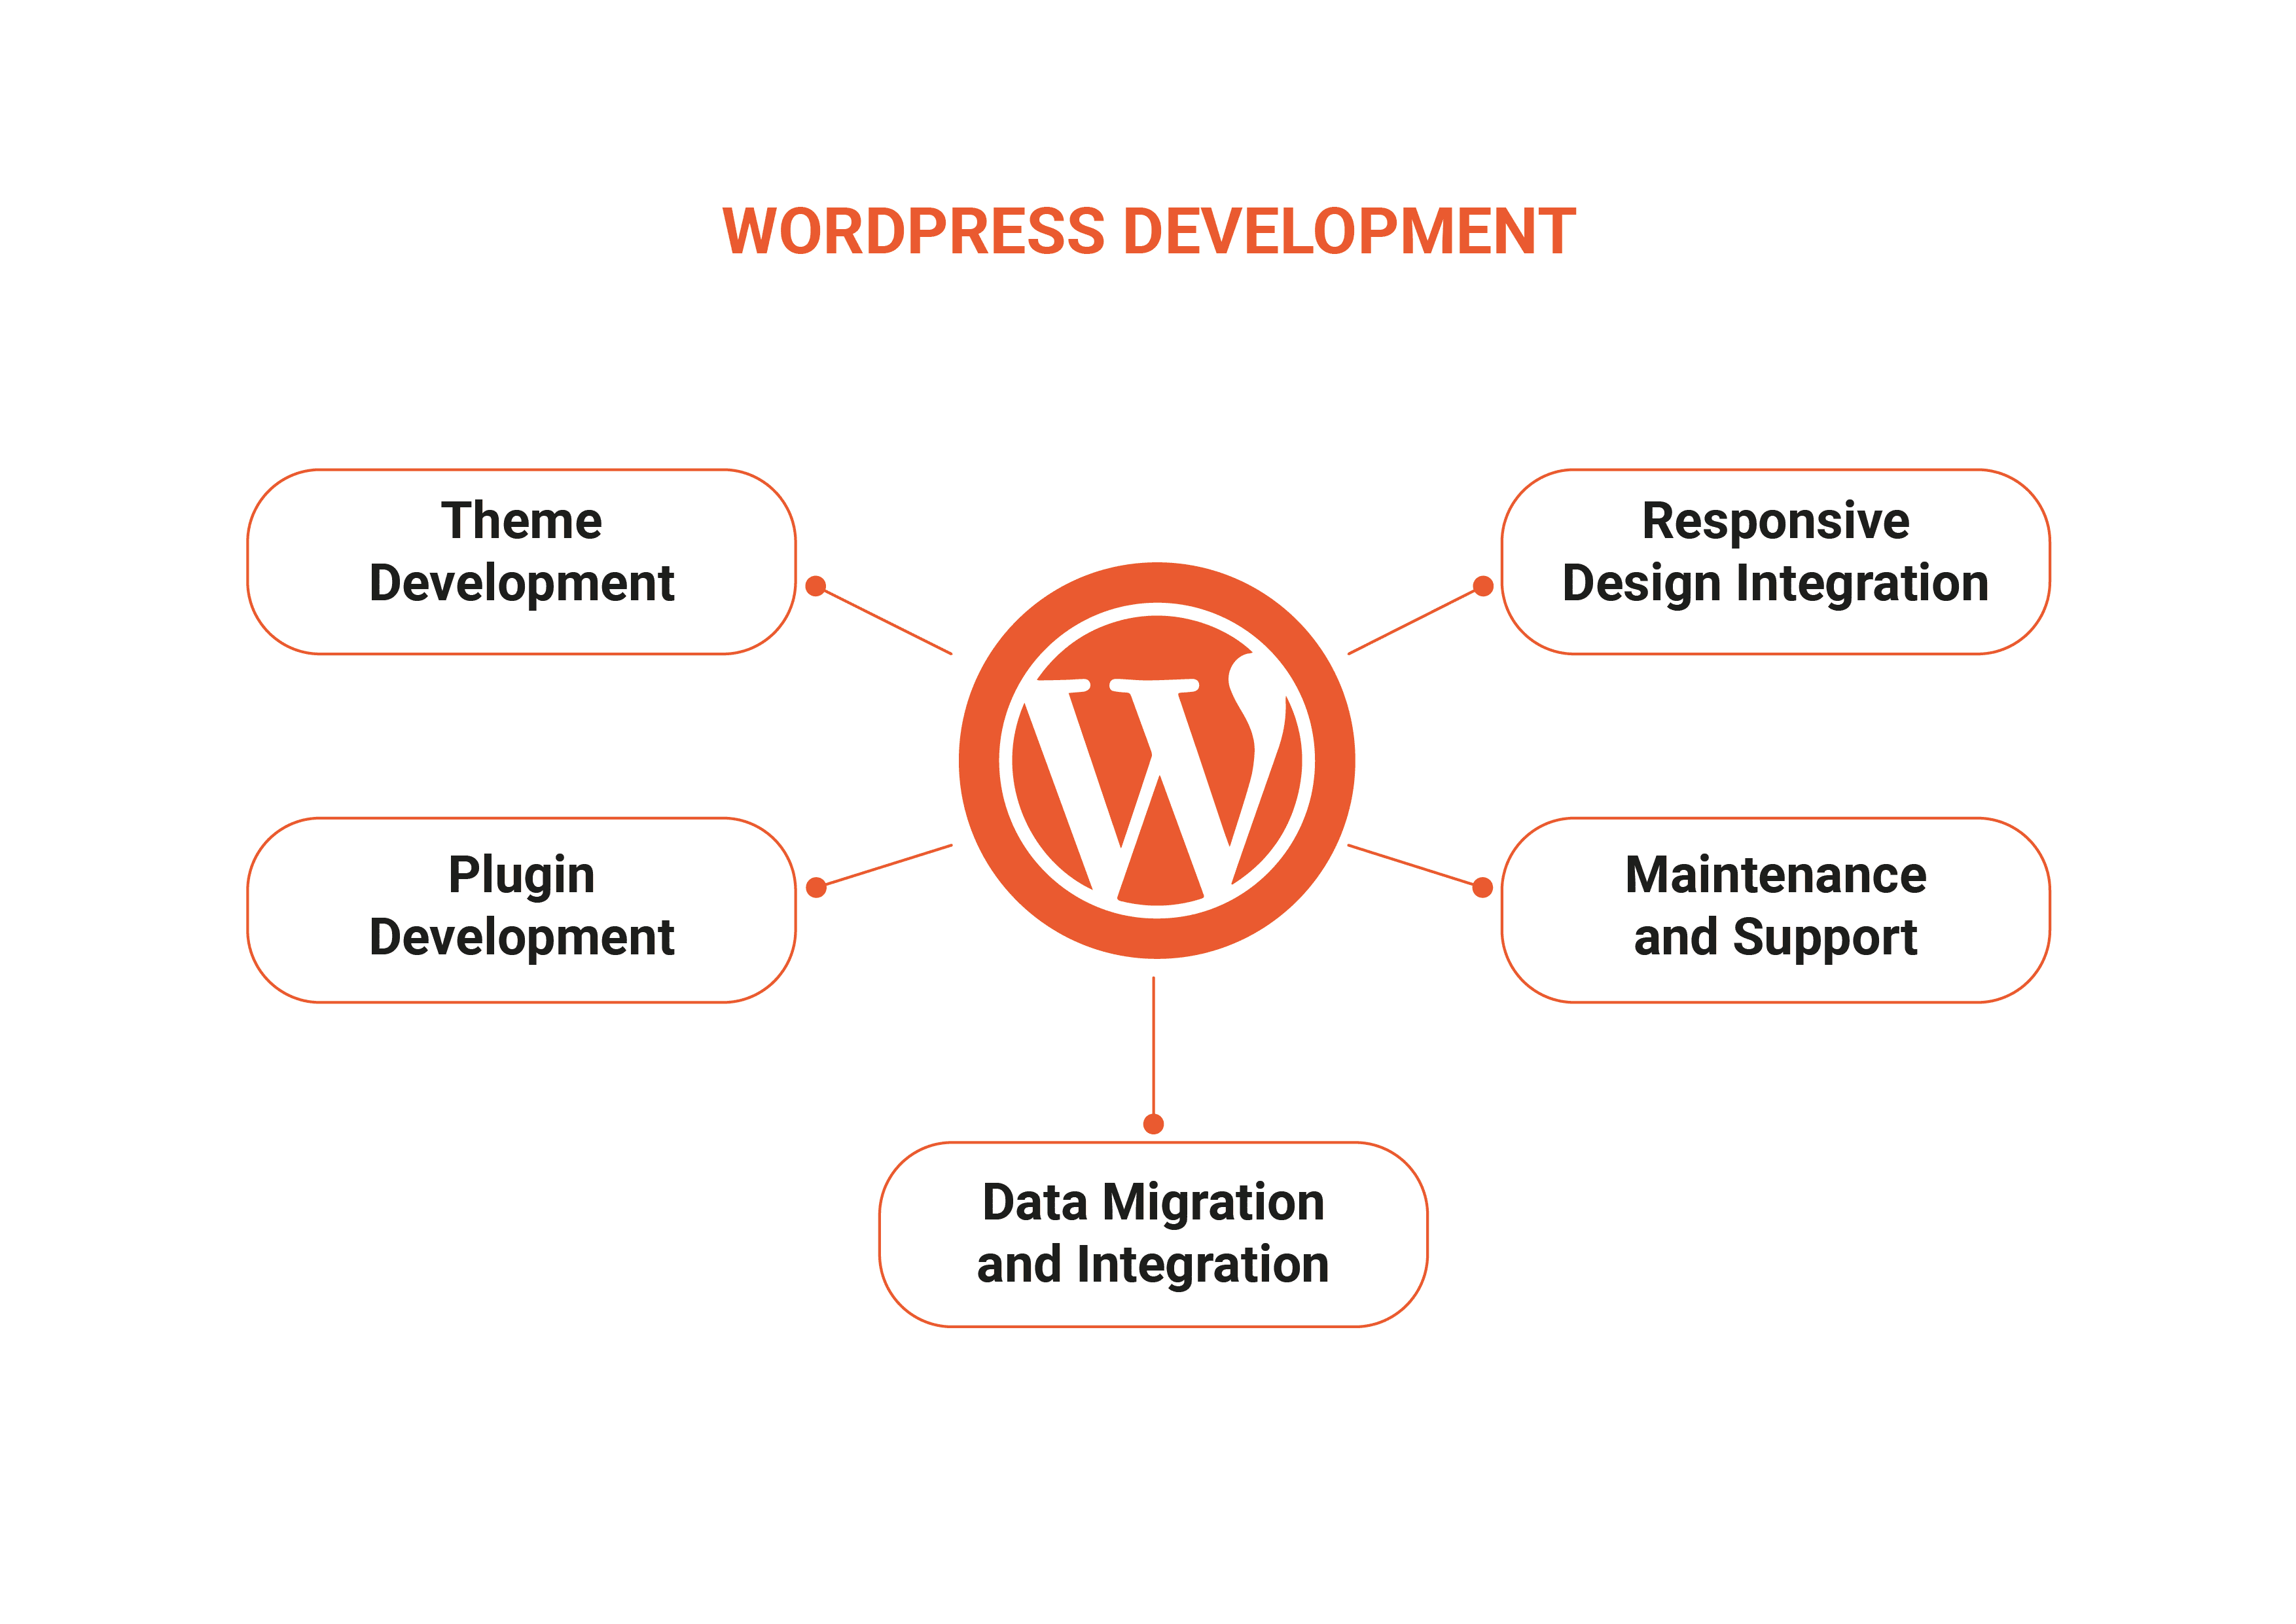 Wordpress development capabilities